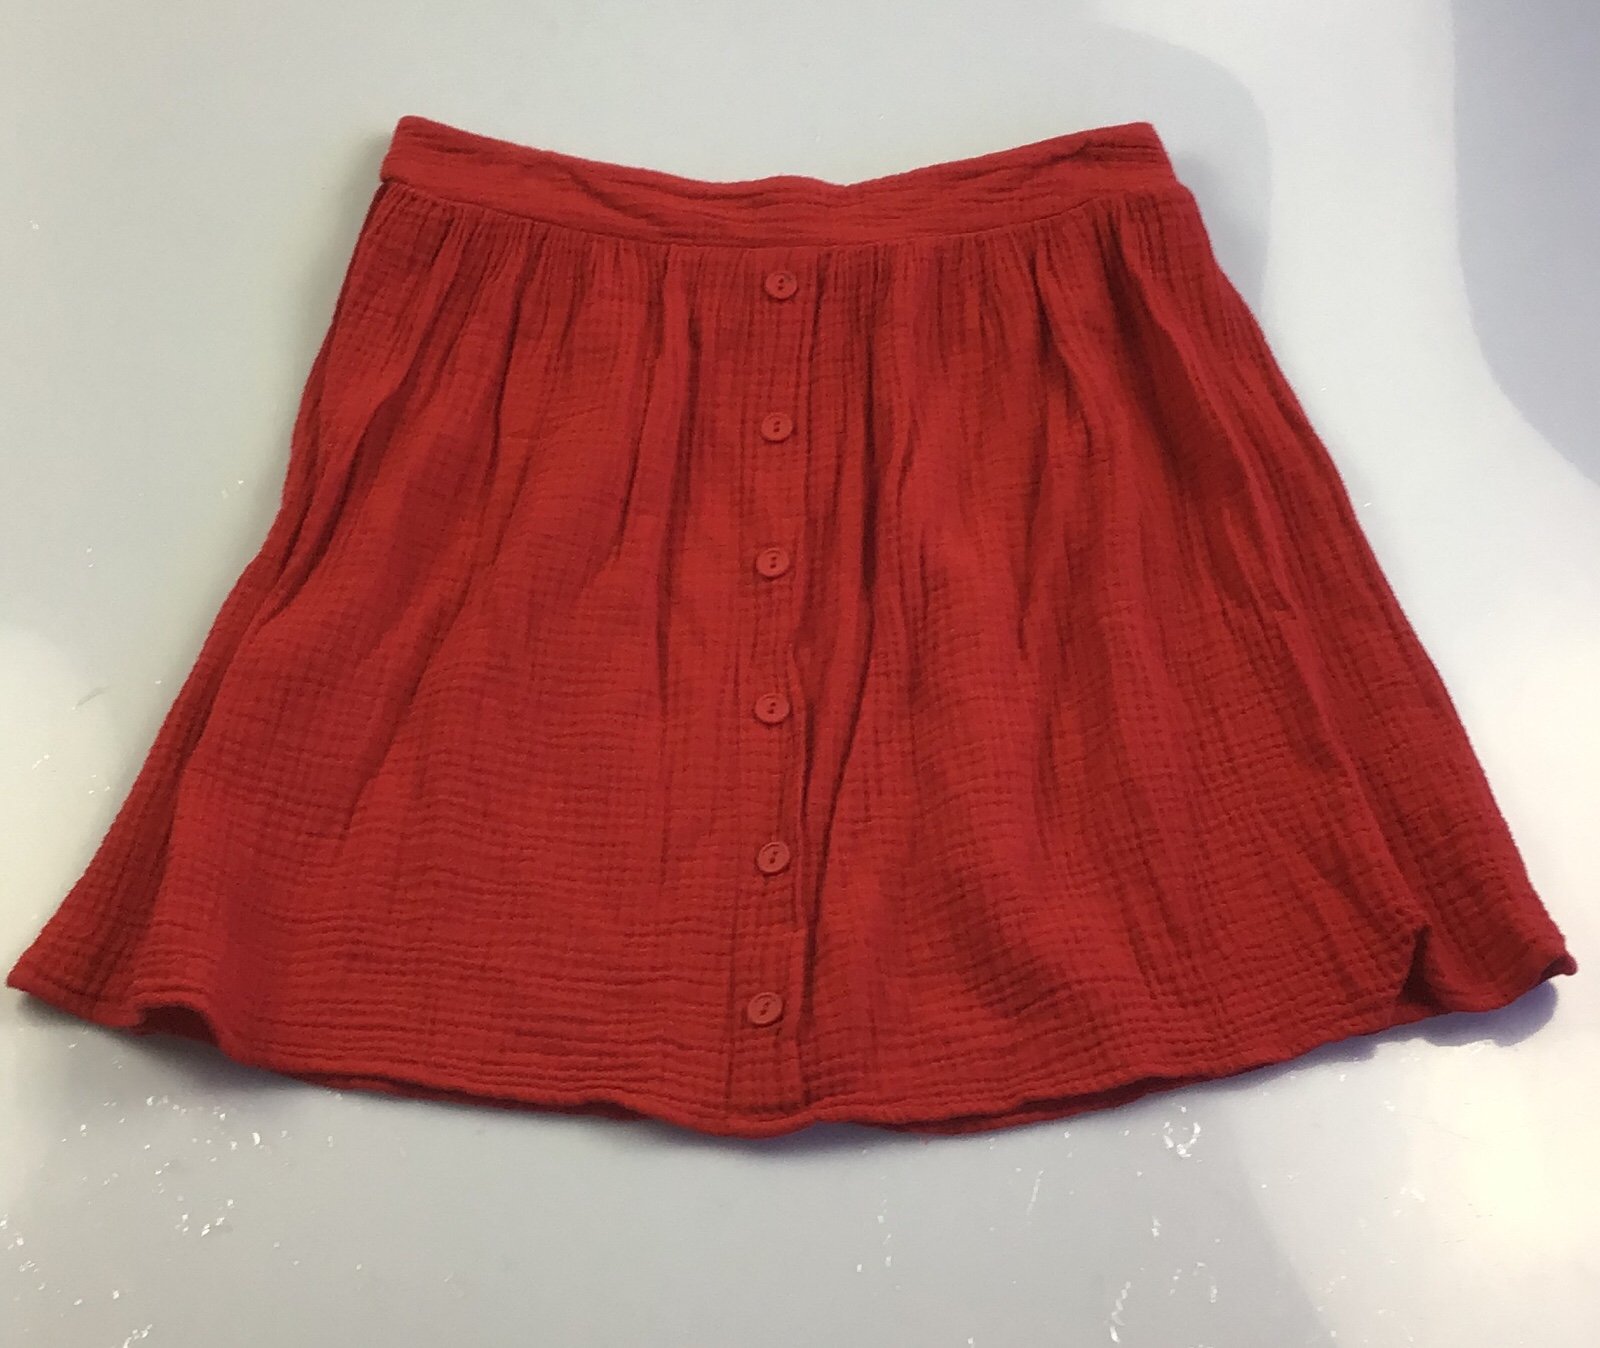 good price Amadi women’s skirt red size L ldksv4gj7 bes